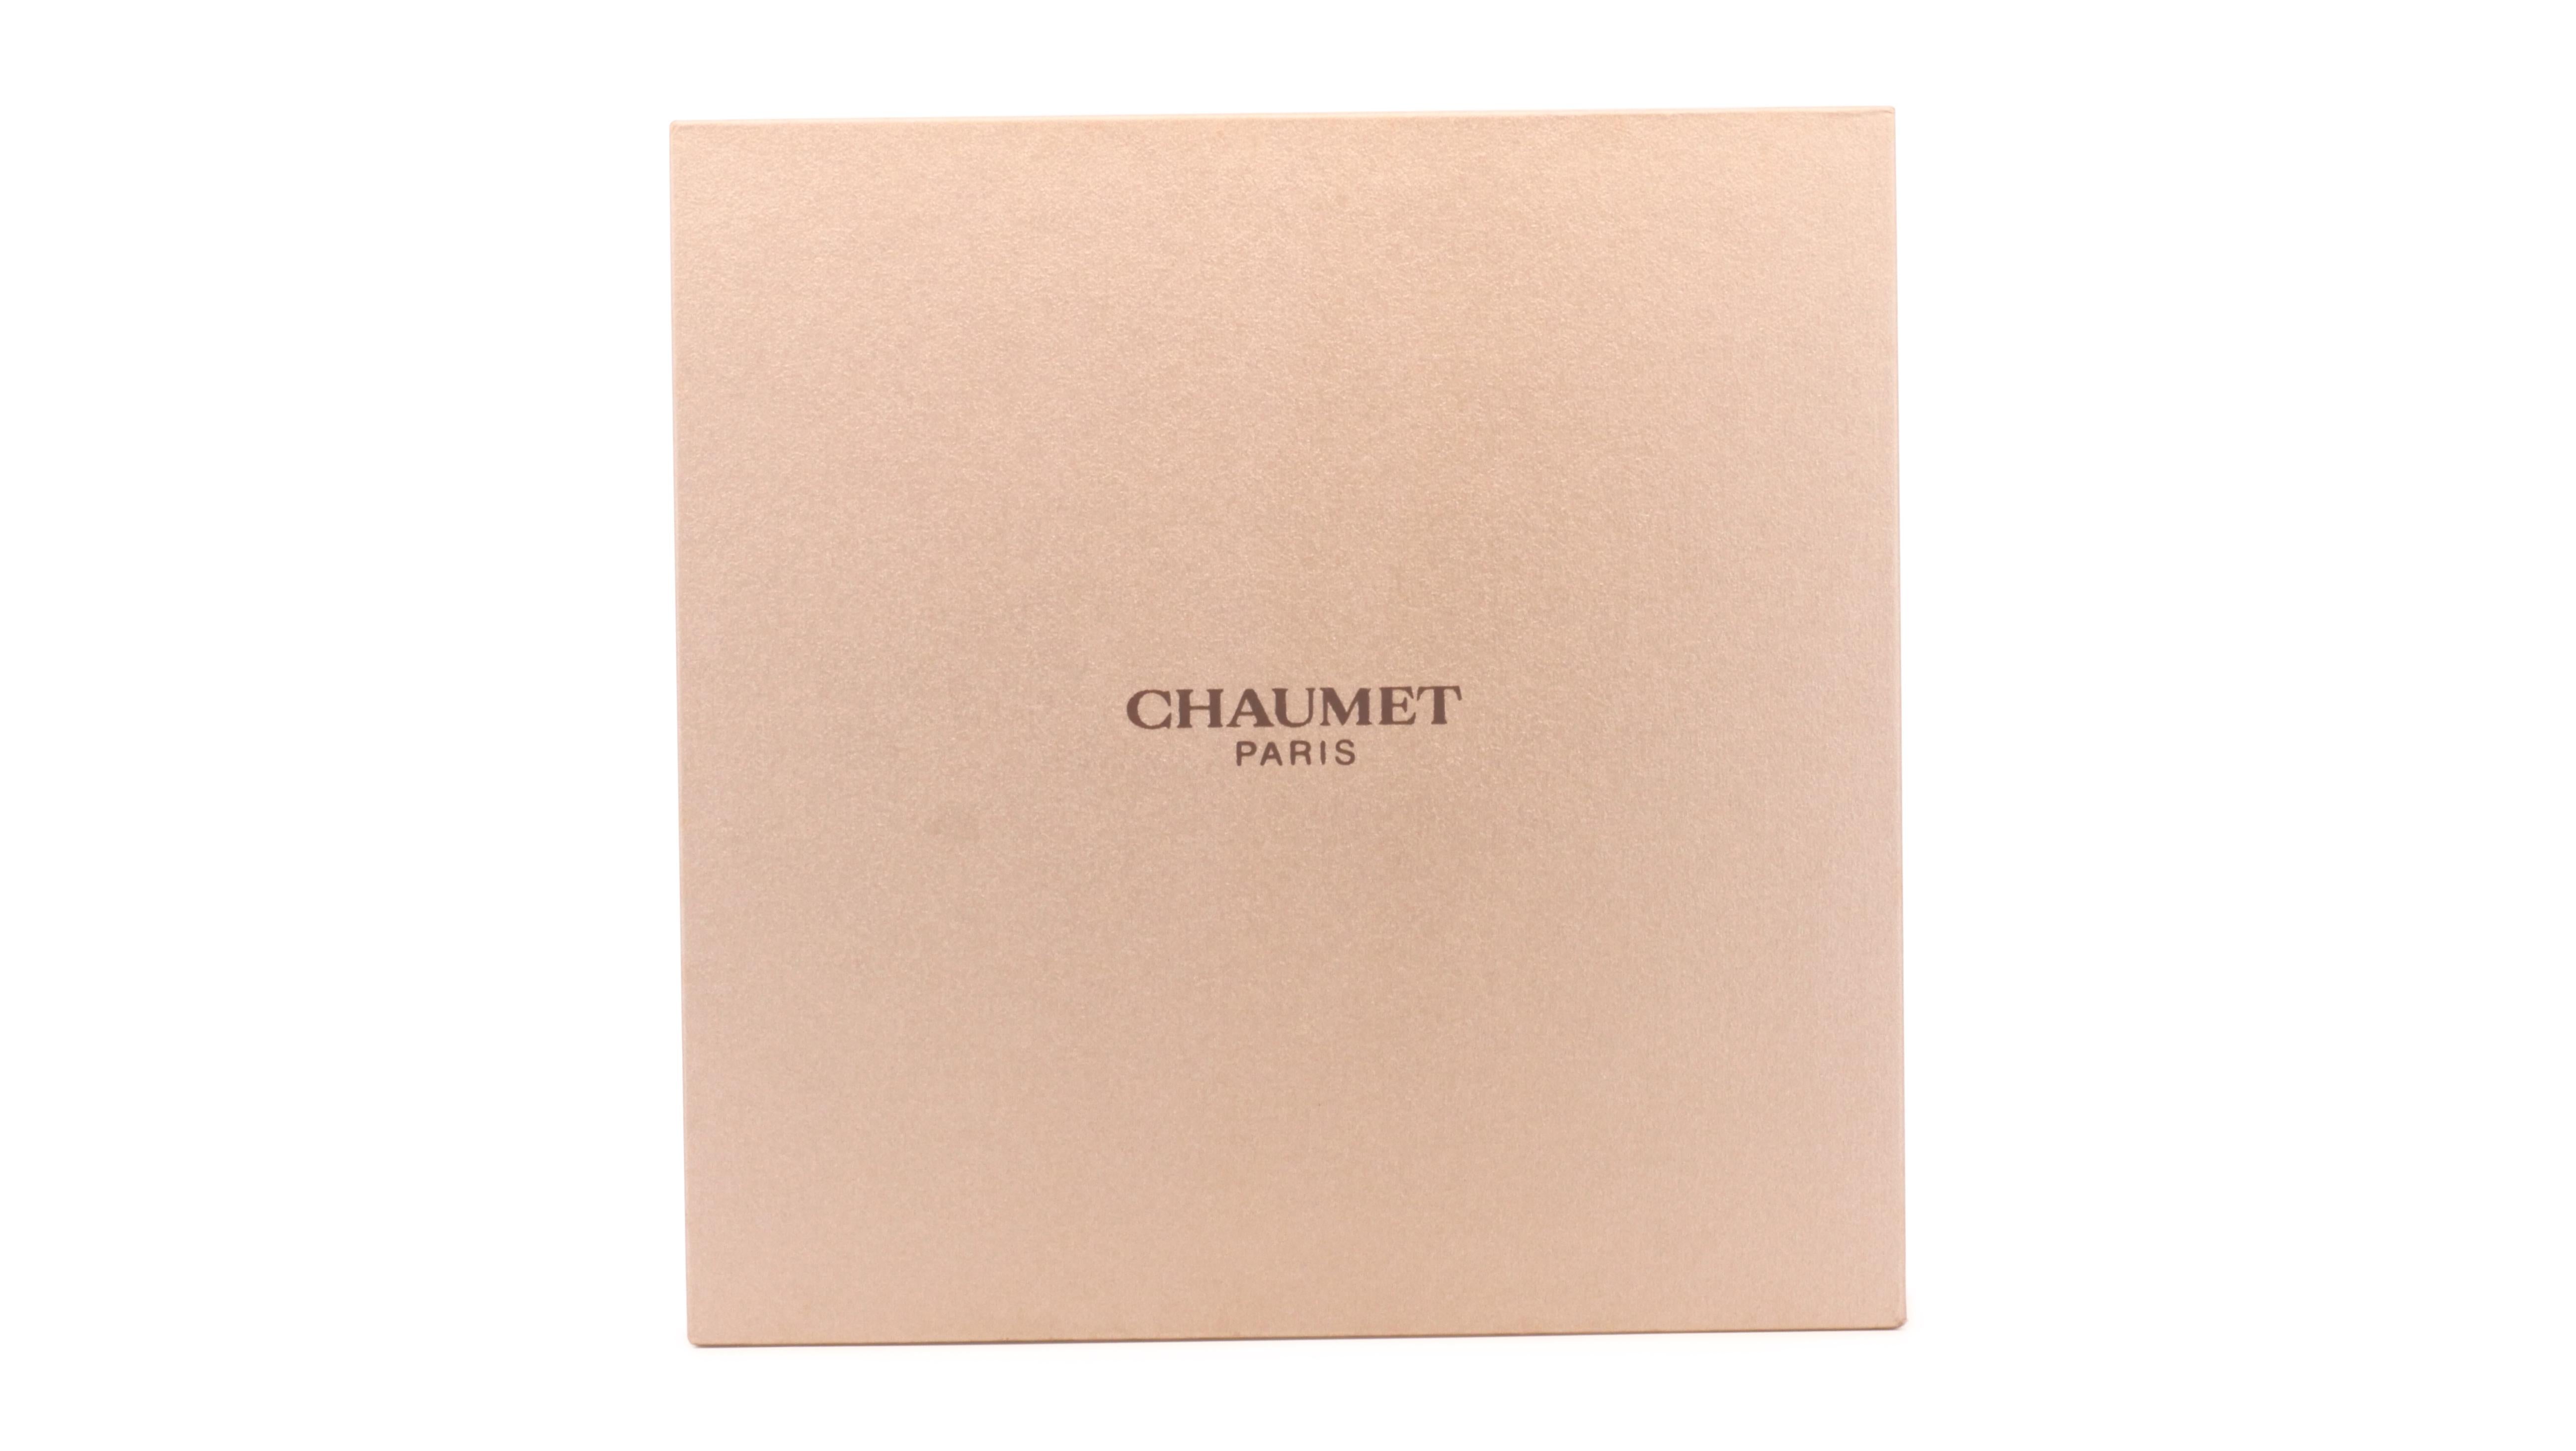 Gorgeous 18k White Gold Bangle with 0.84 Ct Natural Diamonds Chaumet Paris 3